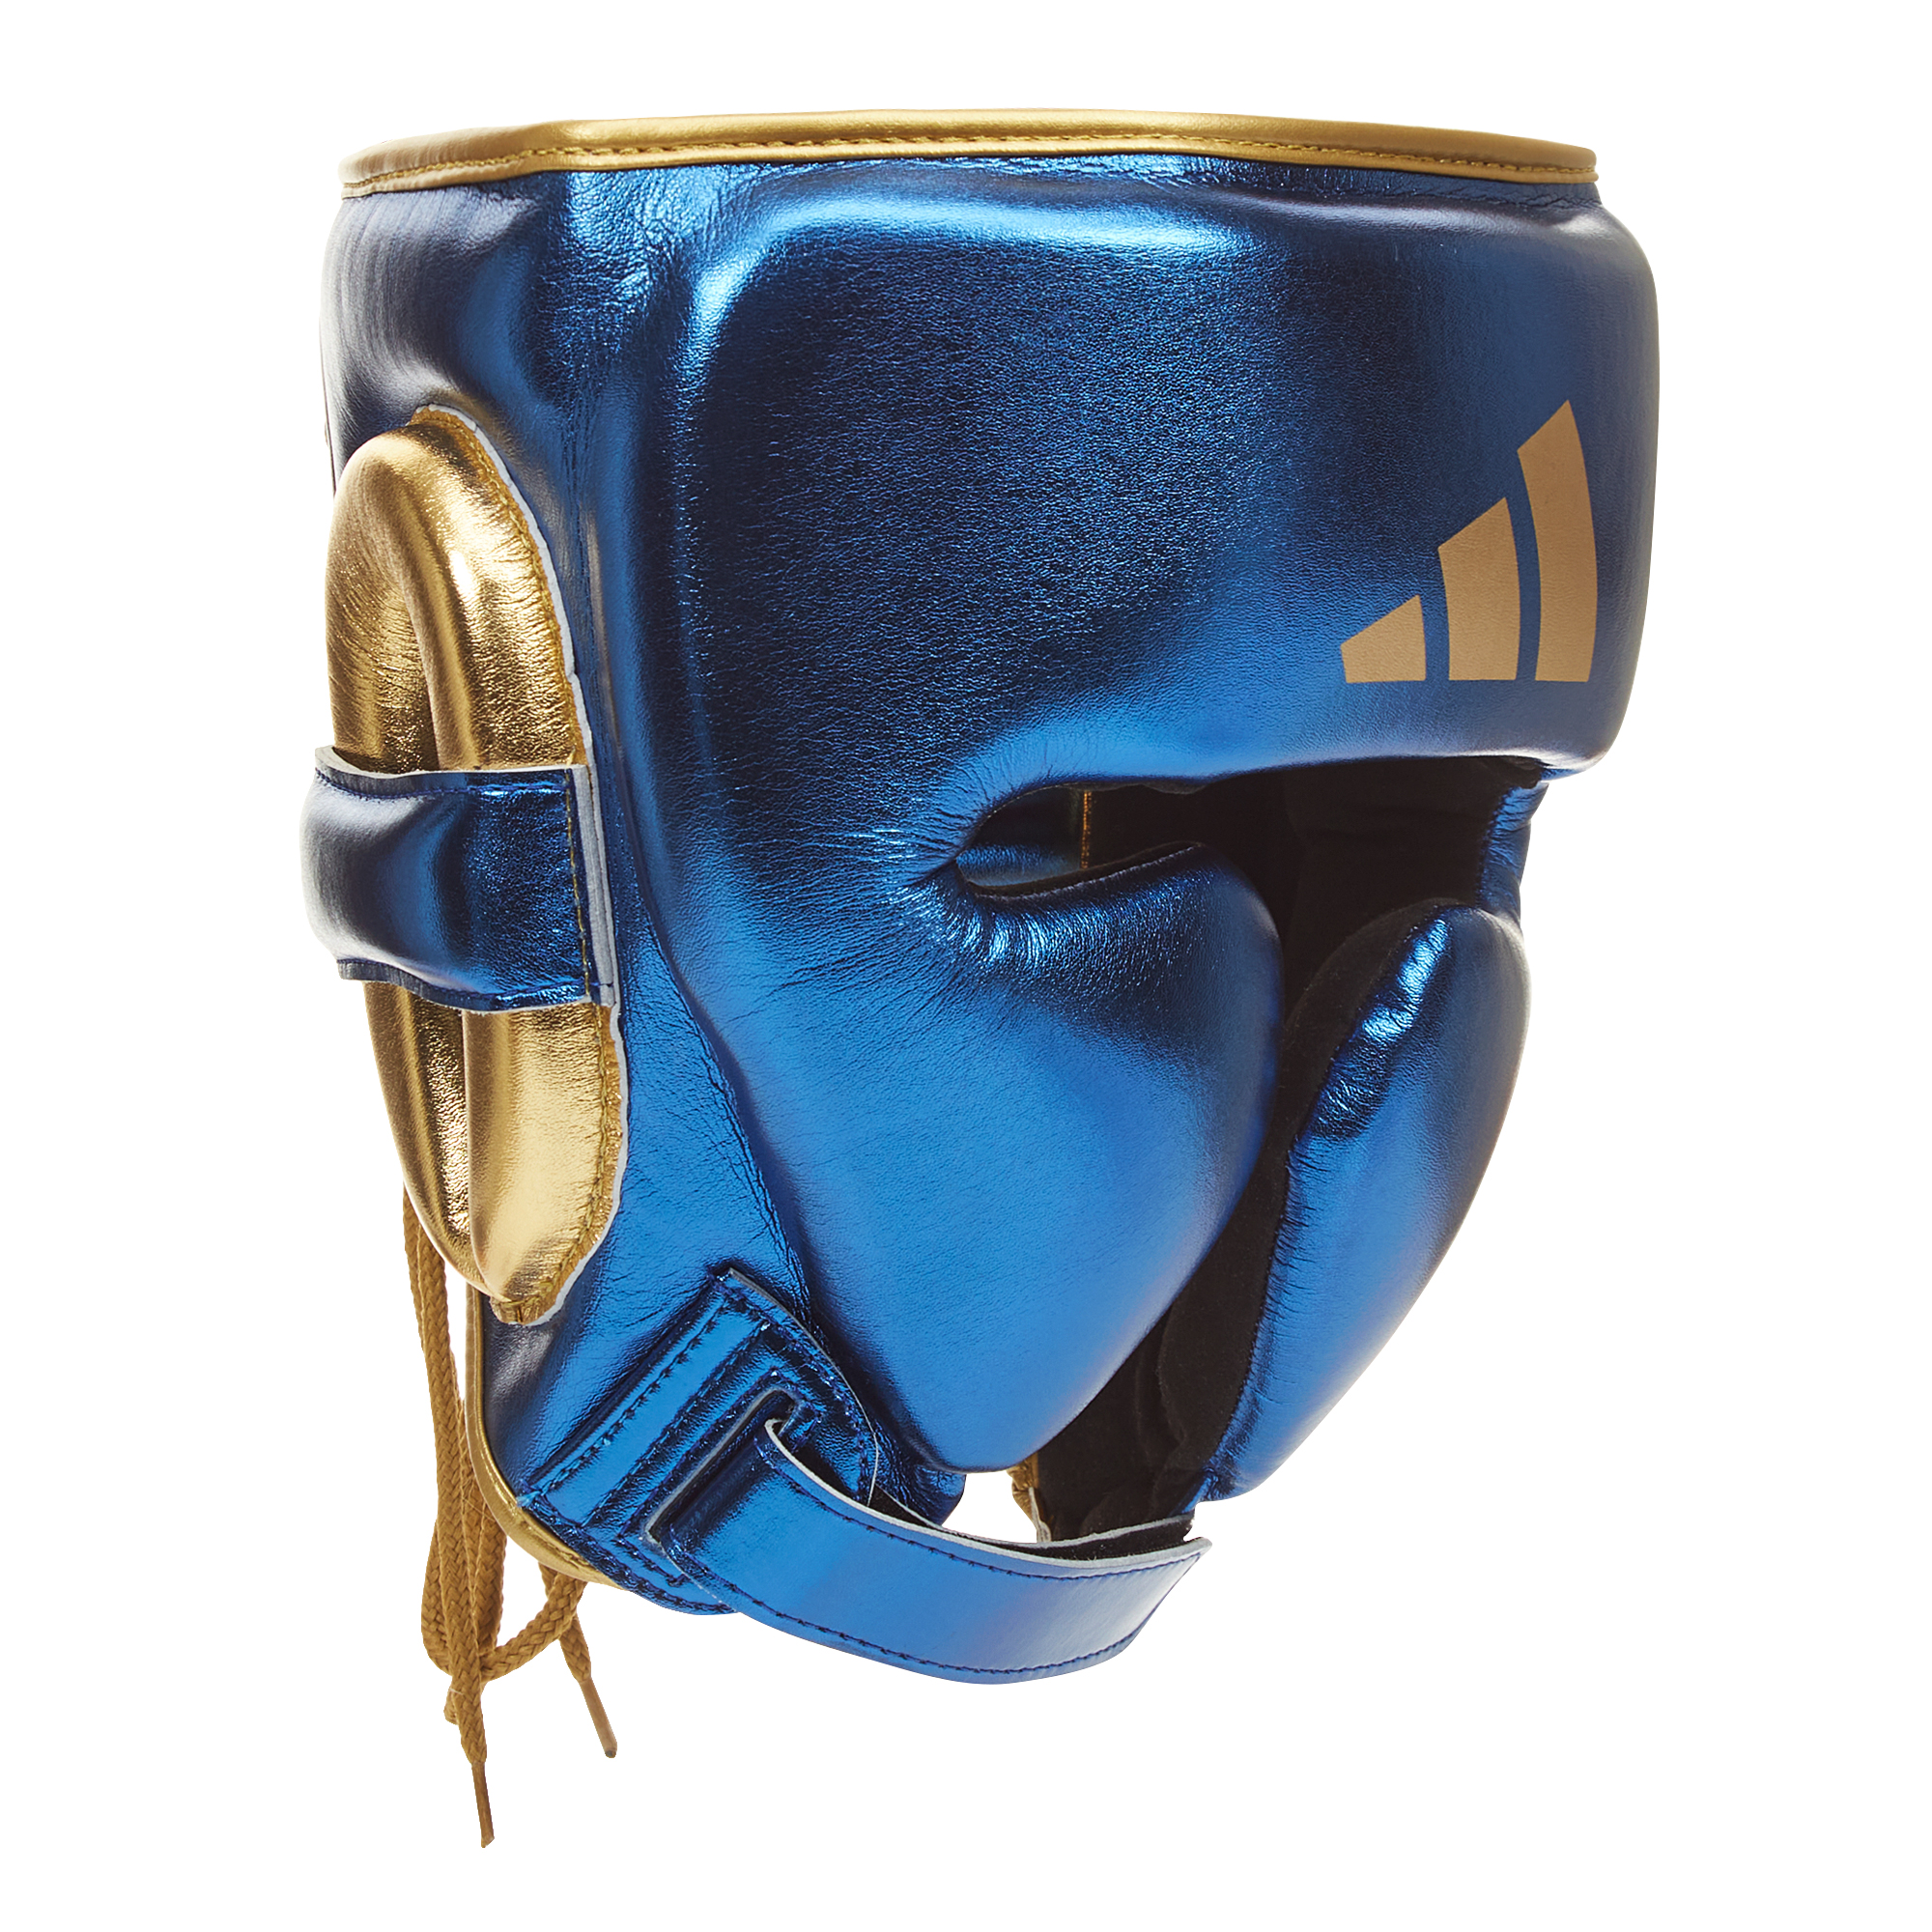 ADISTAR Pro Head Gear - BLUE/GOLD